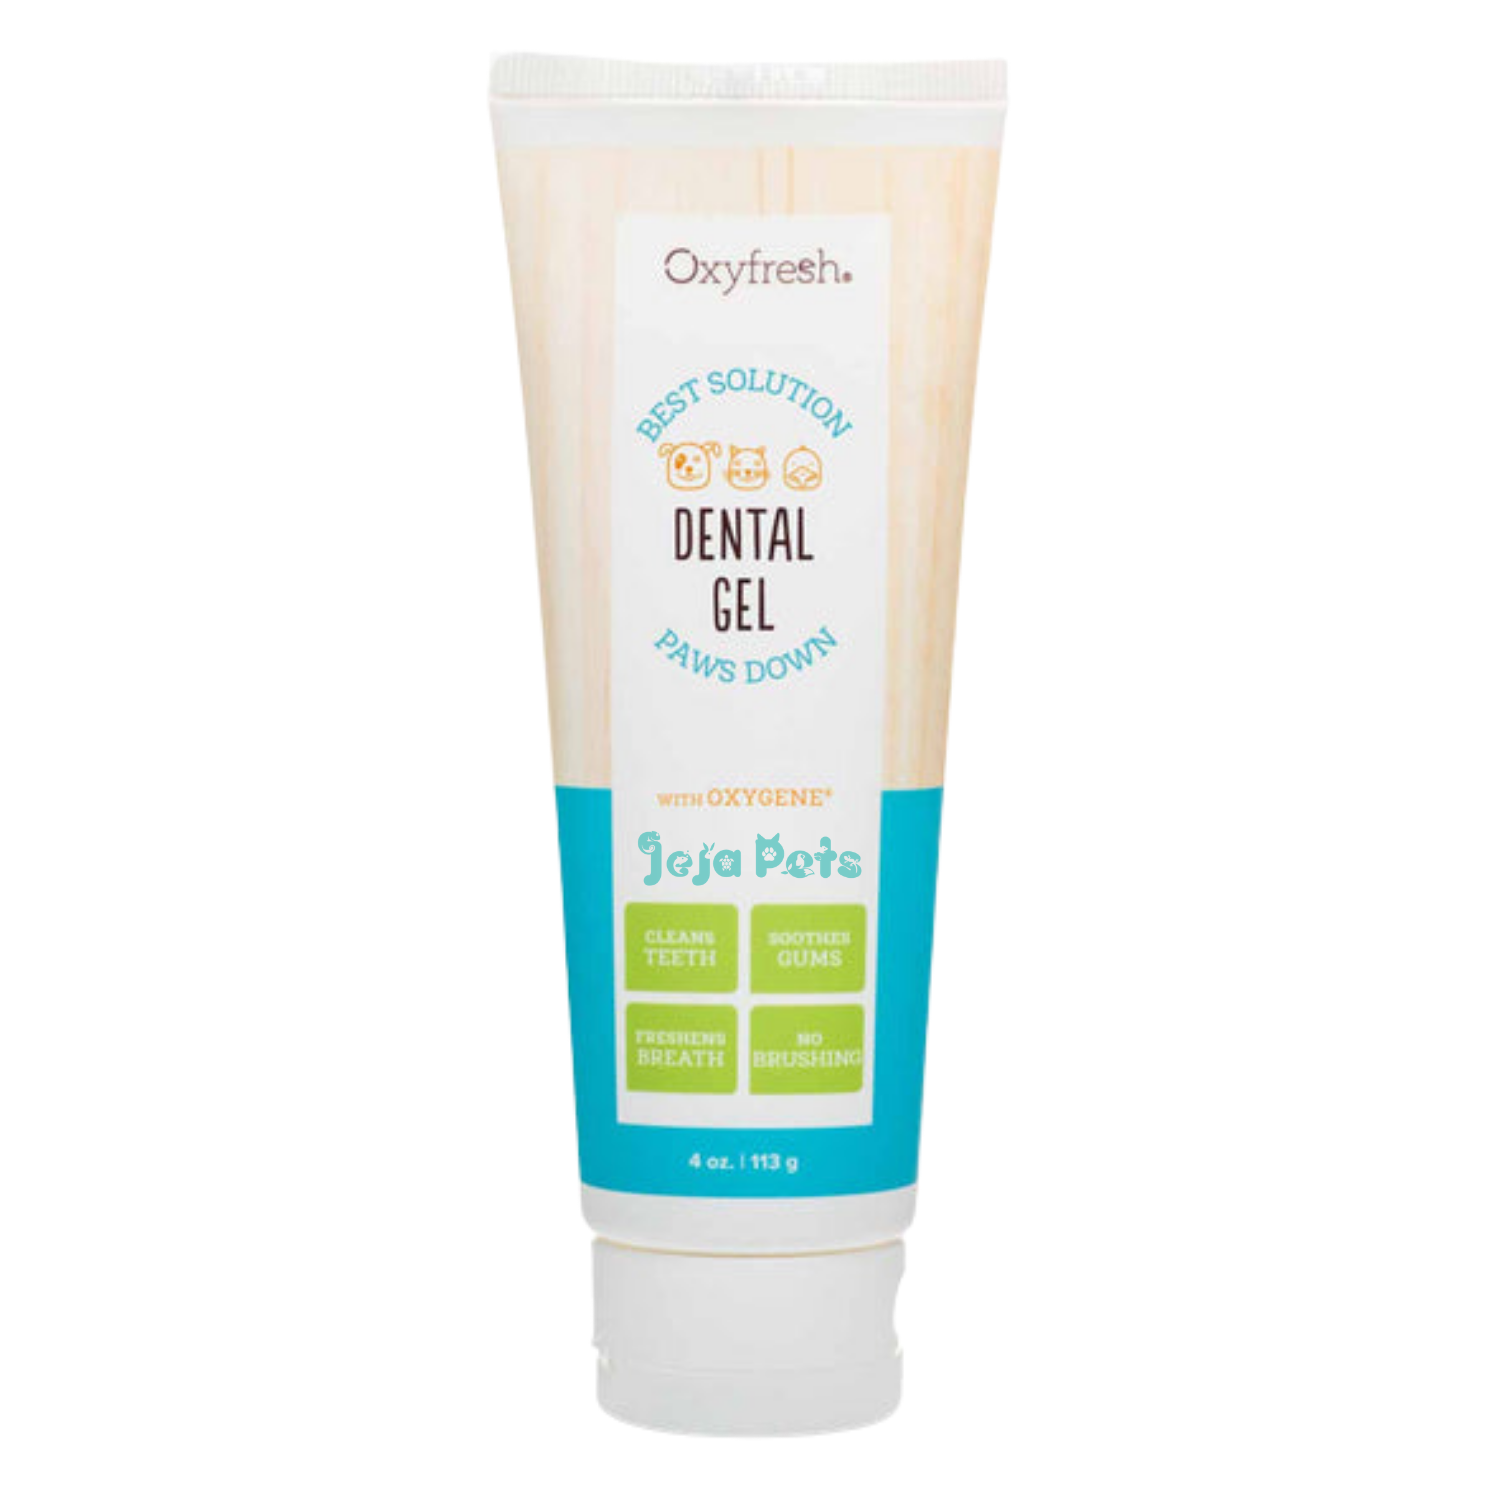 Oxyfresh Pet Dental Gel Toothpaste - 113g